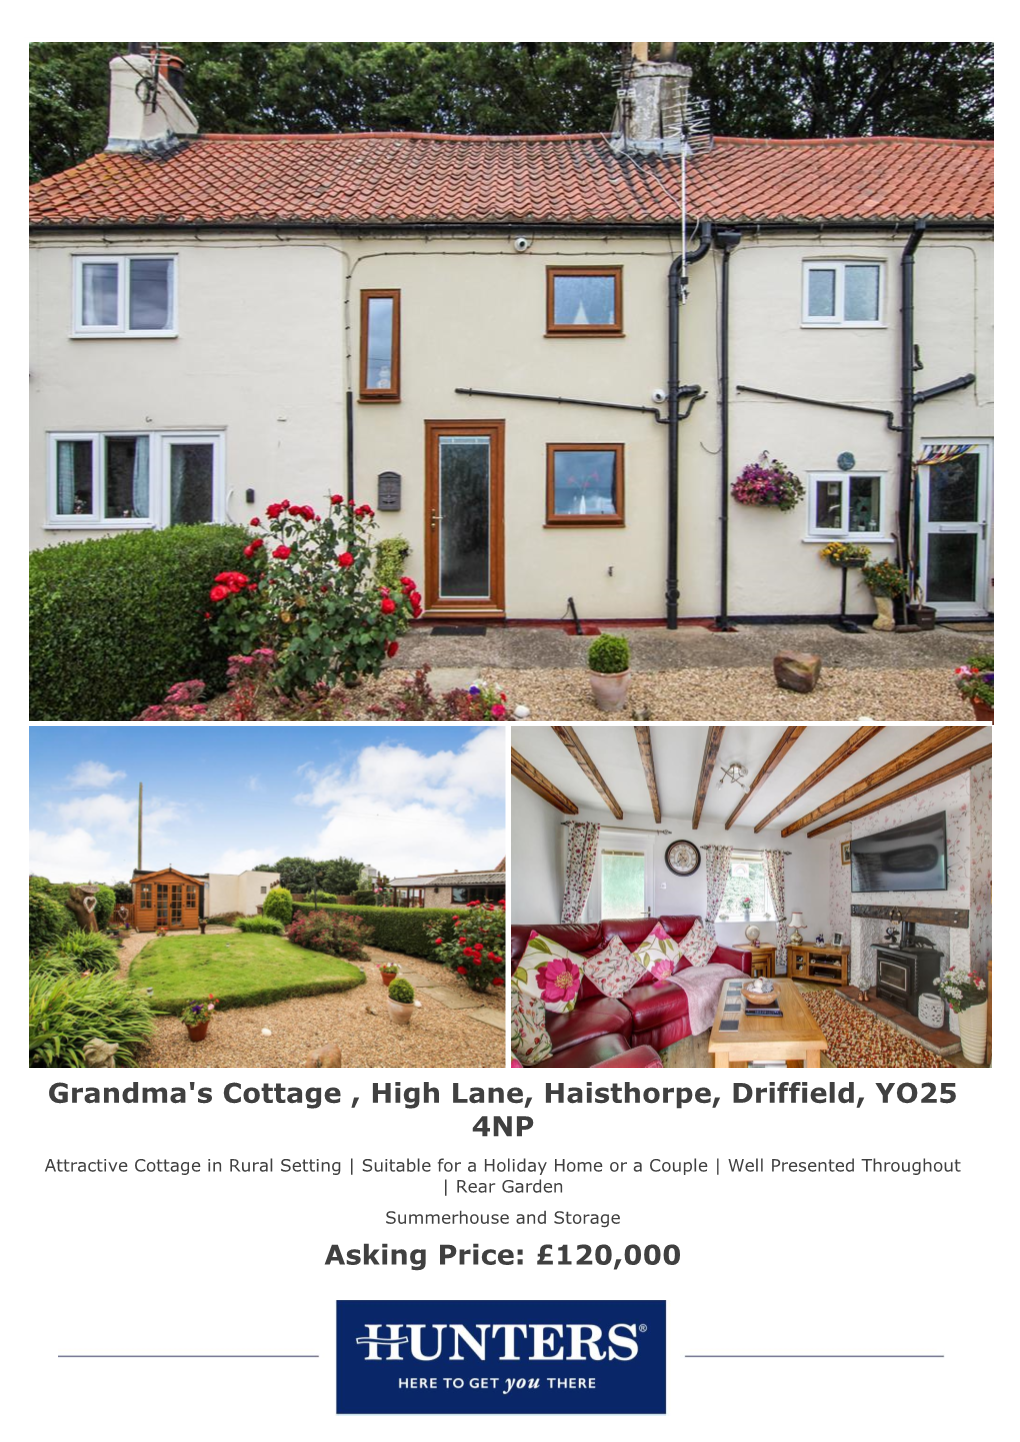 Grandma's Cottage , High Lane, Haisthorpe, Driffield, YO25 4NP Asking Price: £120,000